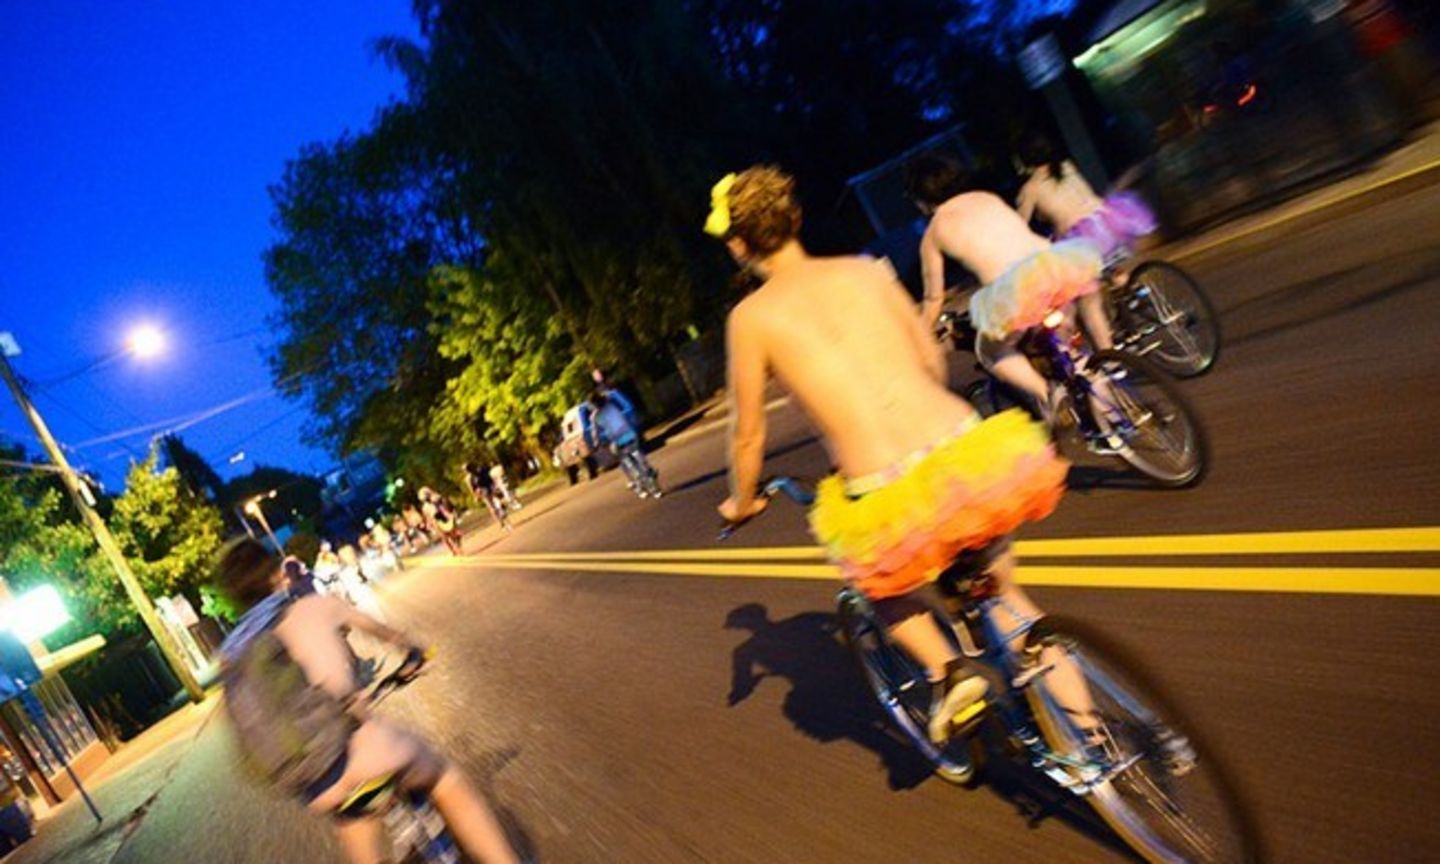 cherrie leblanc share naked bike ride in portland photos